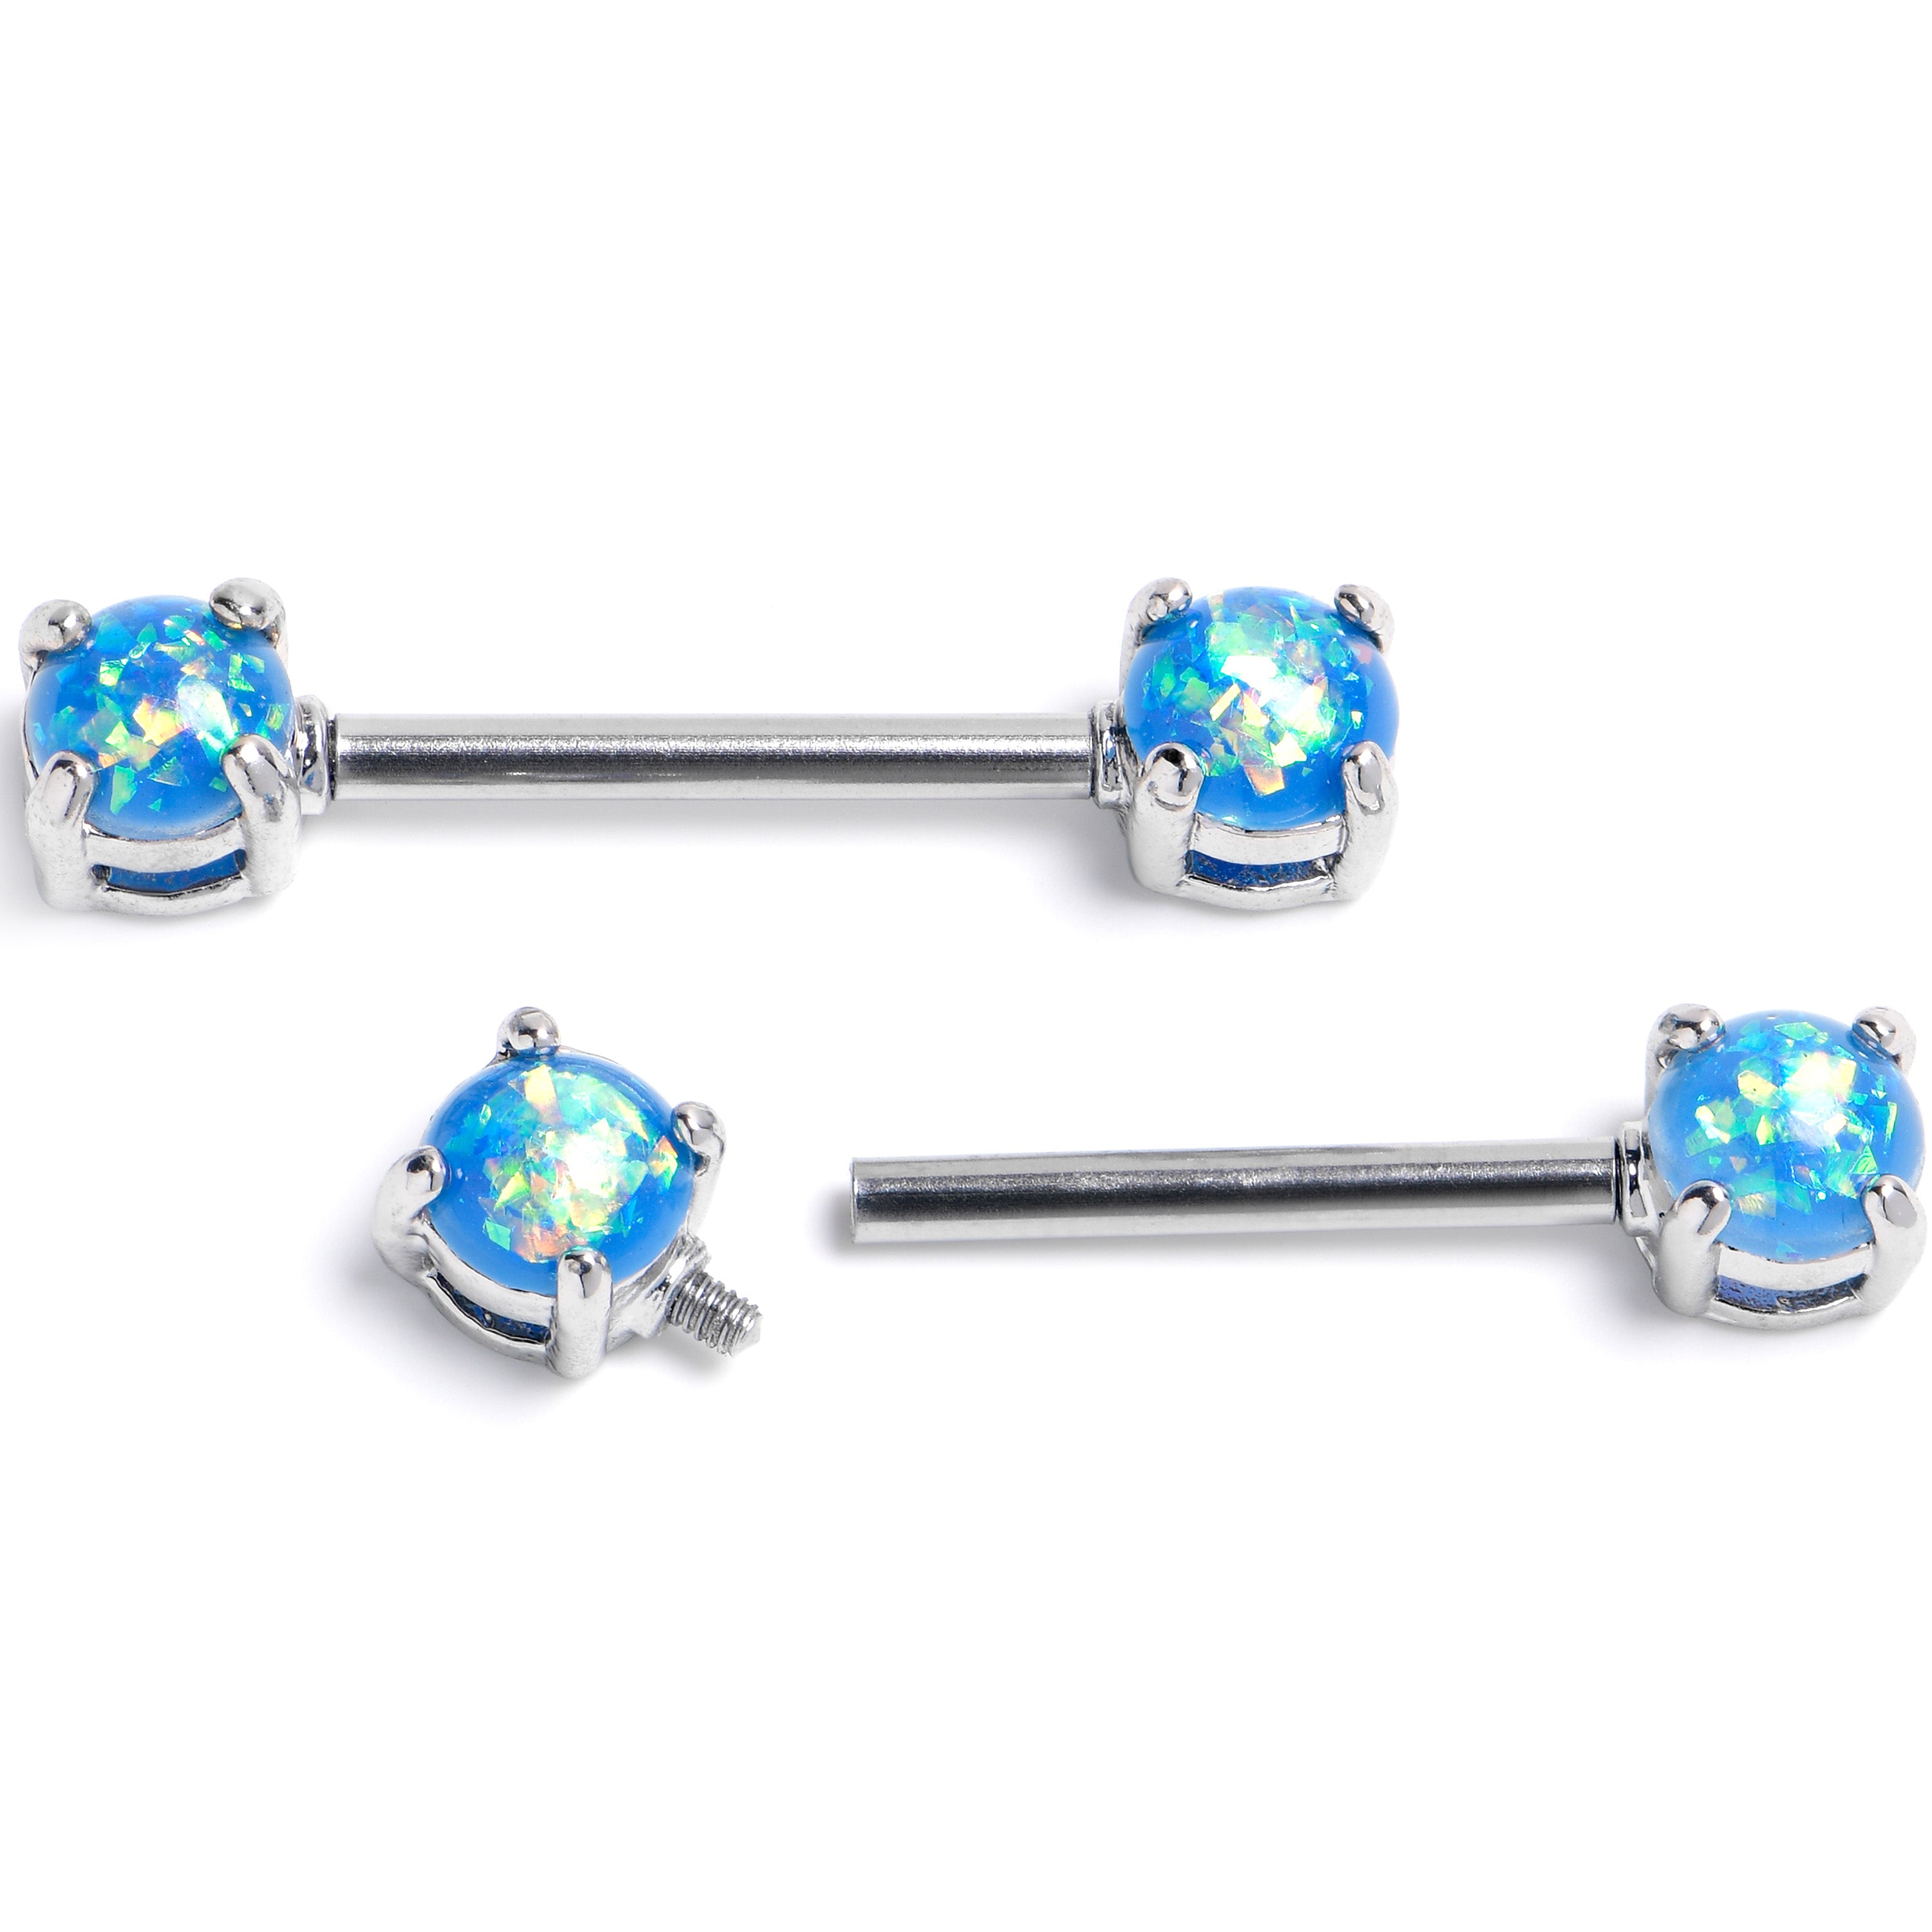 14 Gauge 9/16 Blue Faux Opal Internally Threaded Barbell Nipple Ring Set